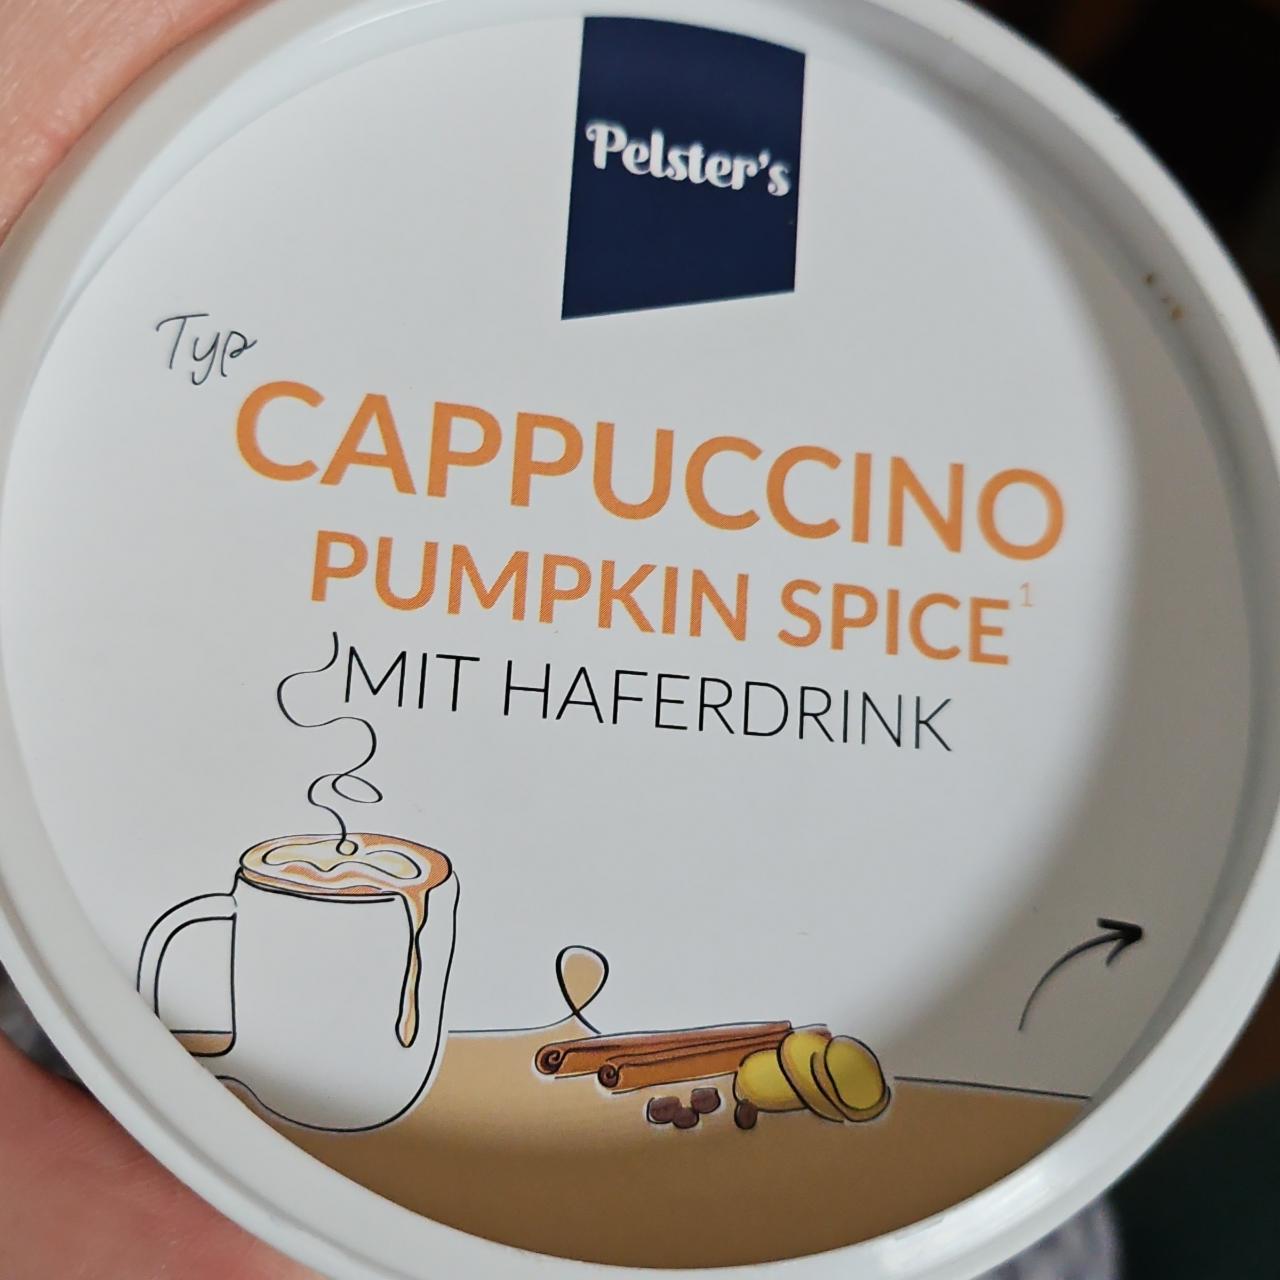 Fotografie - Typ Cappuccino pumpkin spice mit kaferdrink Pelster's